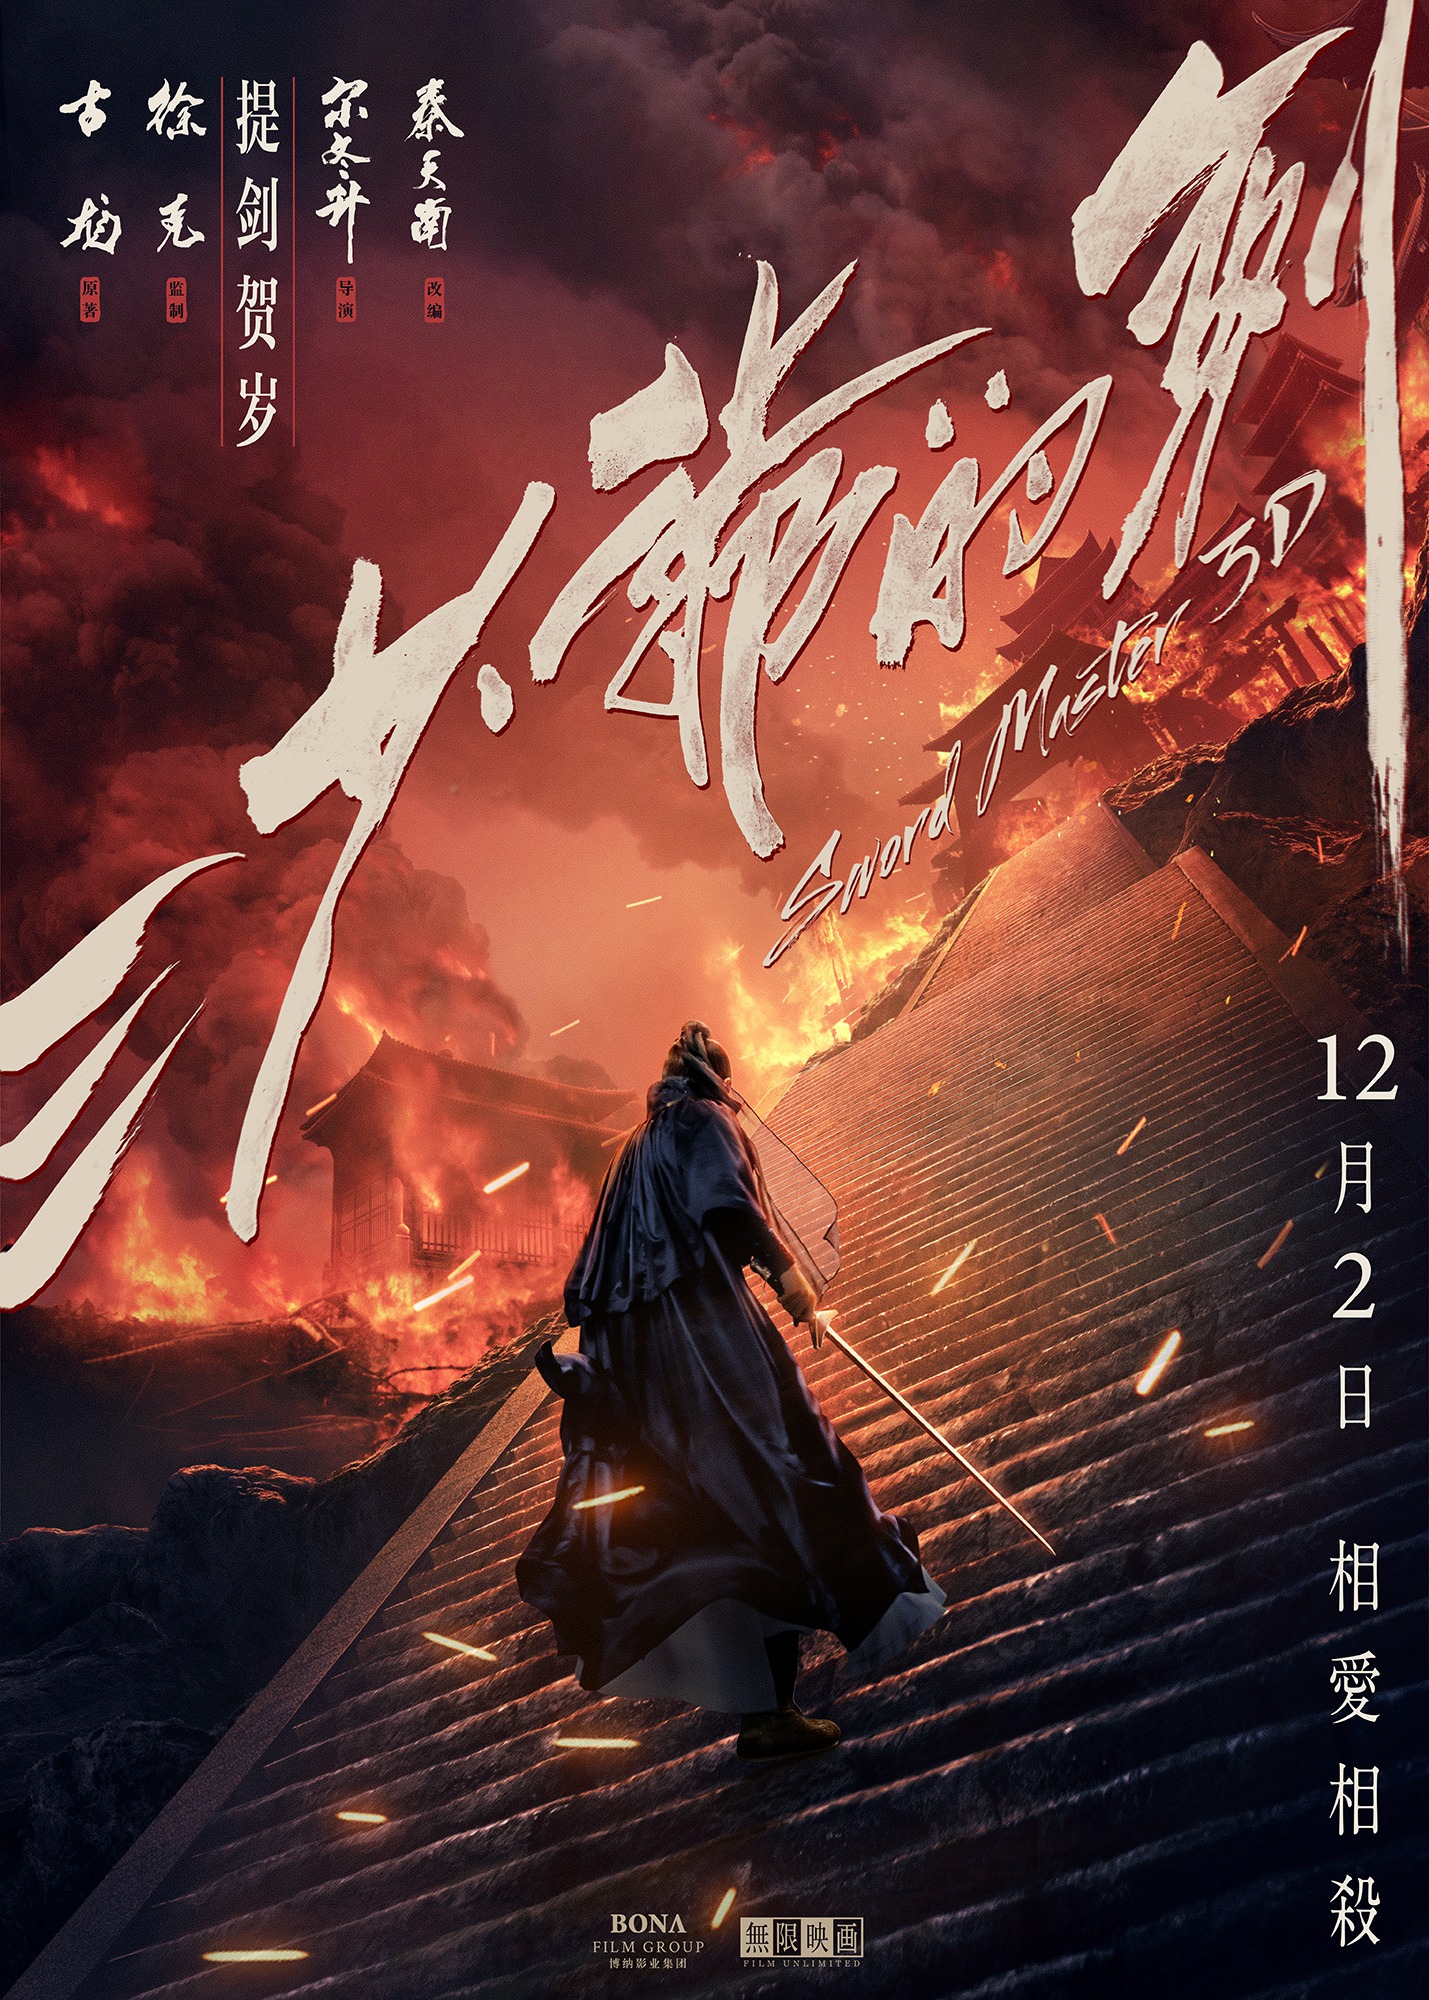 Mega Sized Movie Poster Image for San shao ye de jian (#11 of 11)